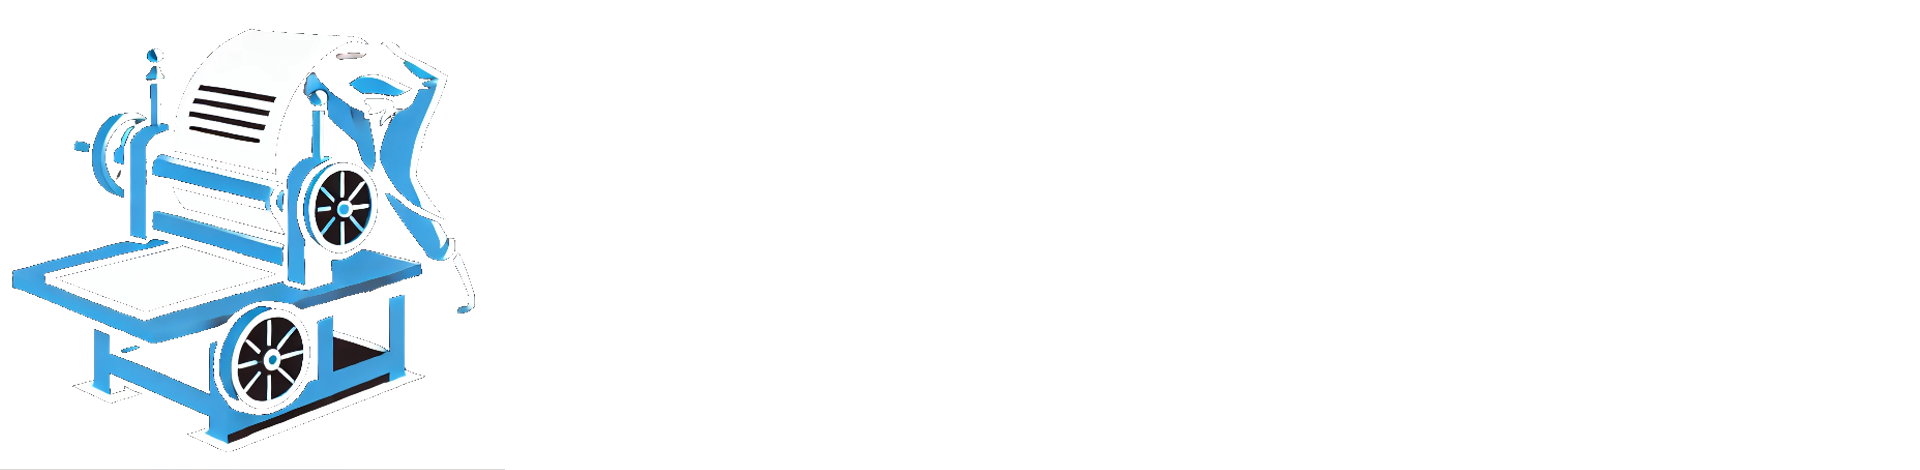 Procurement Printing Press